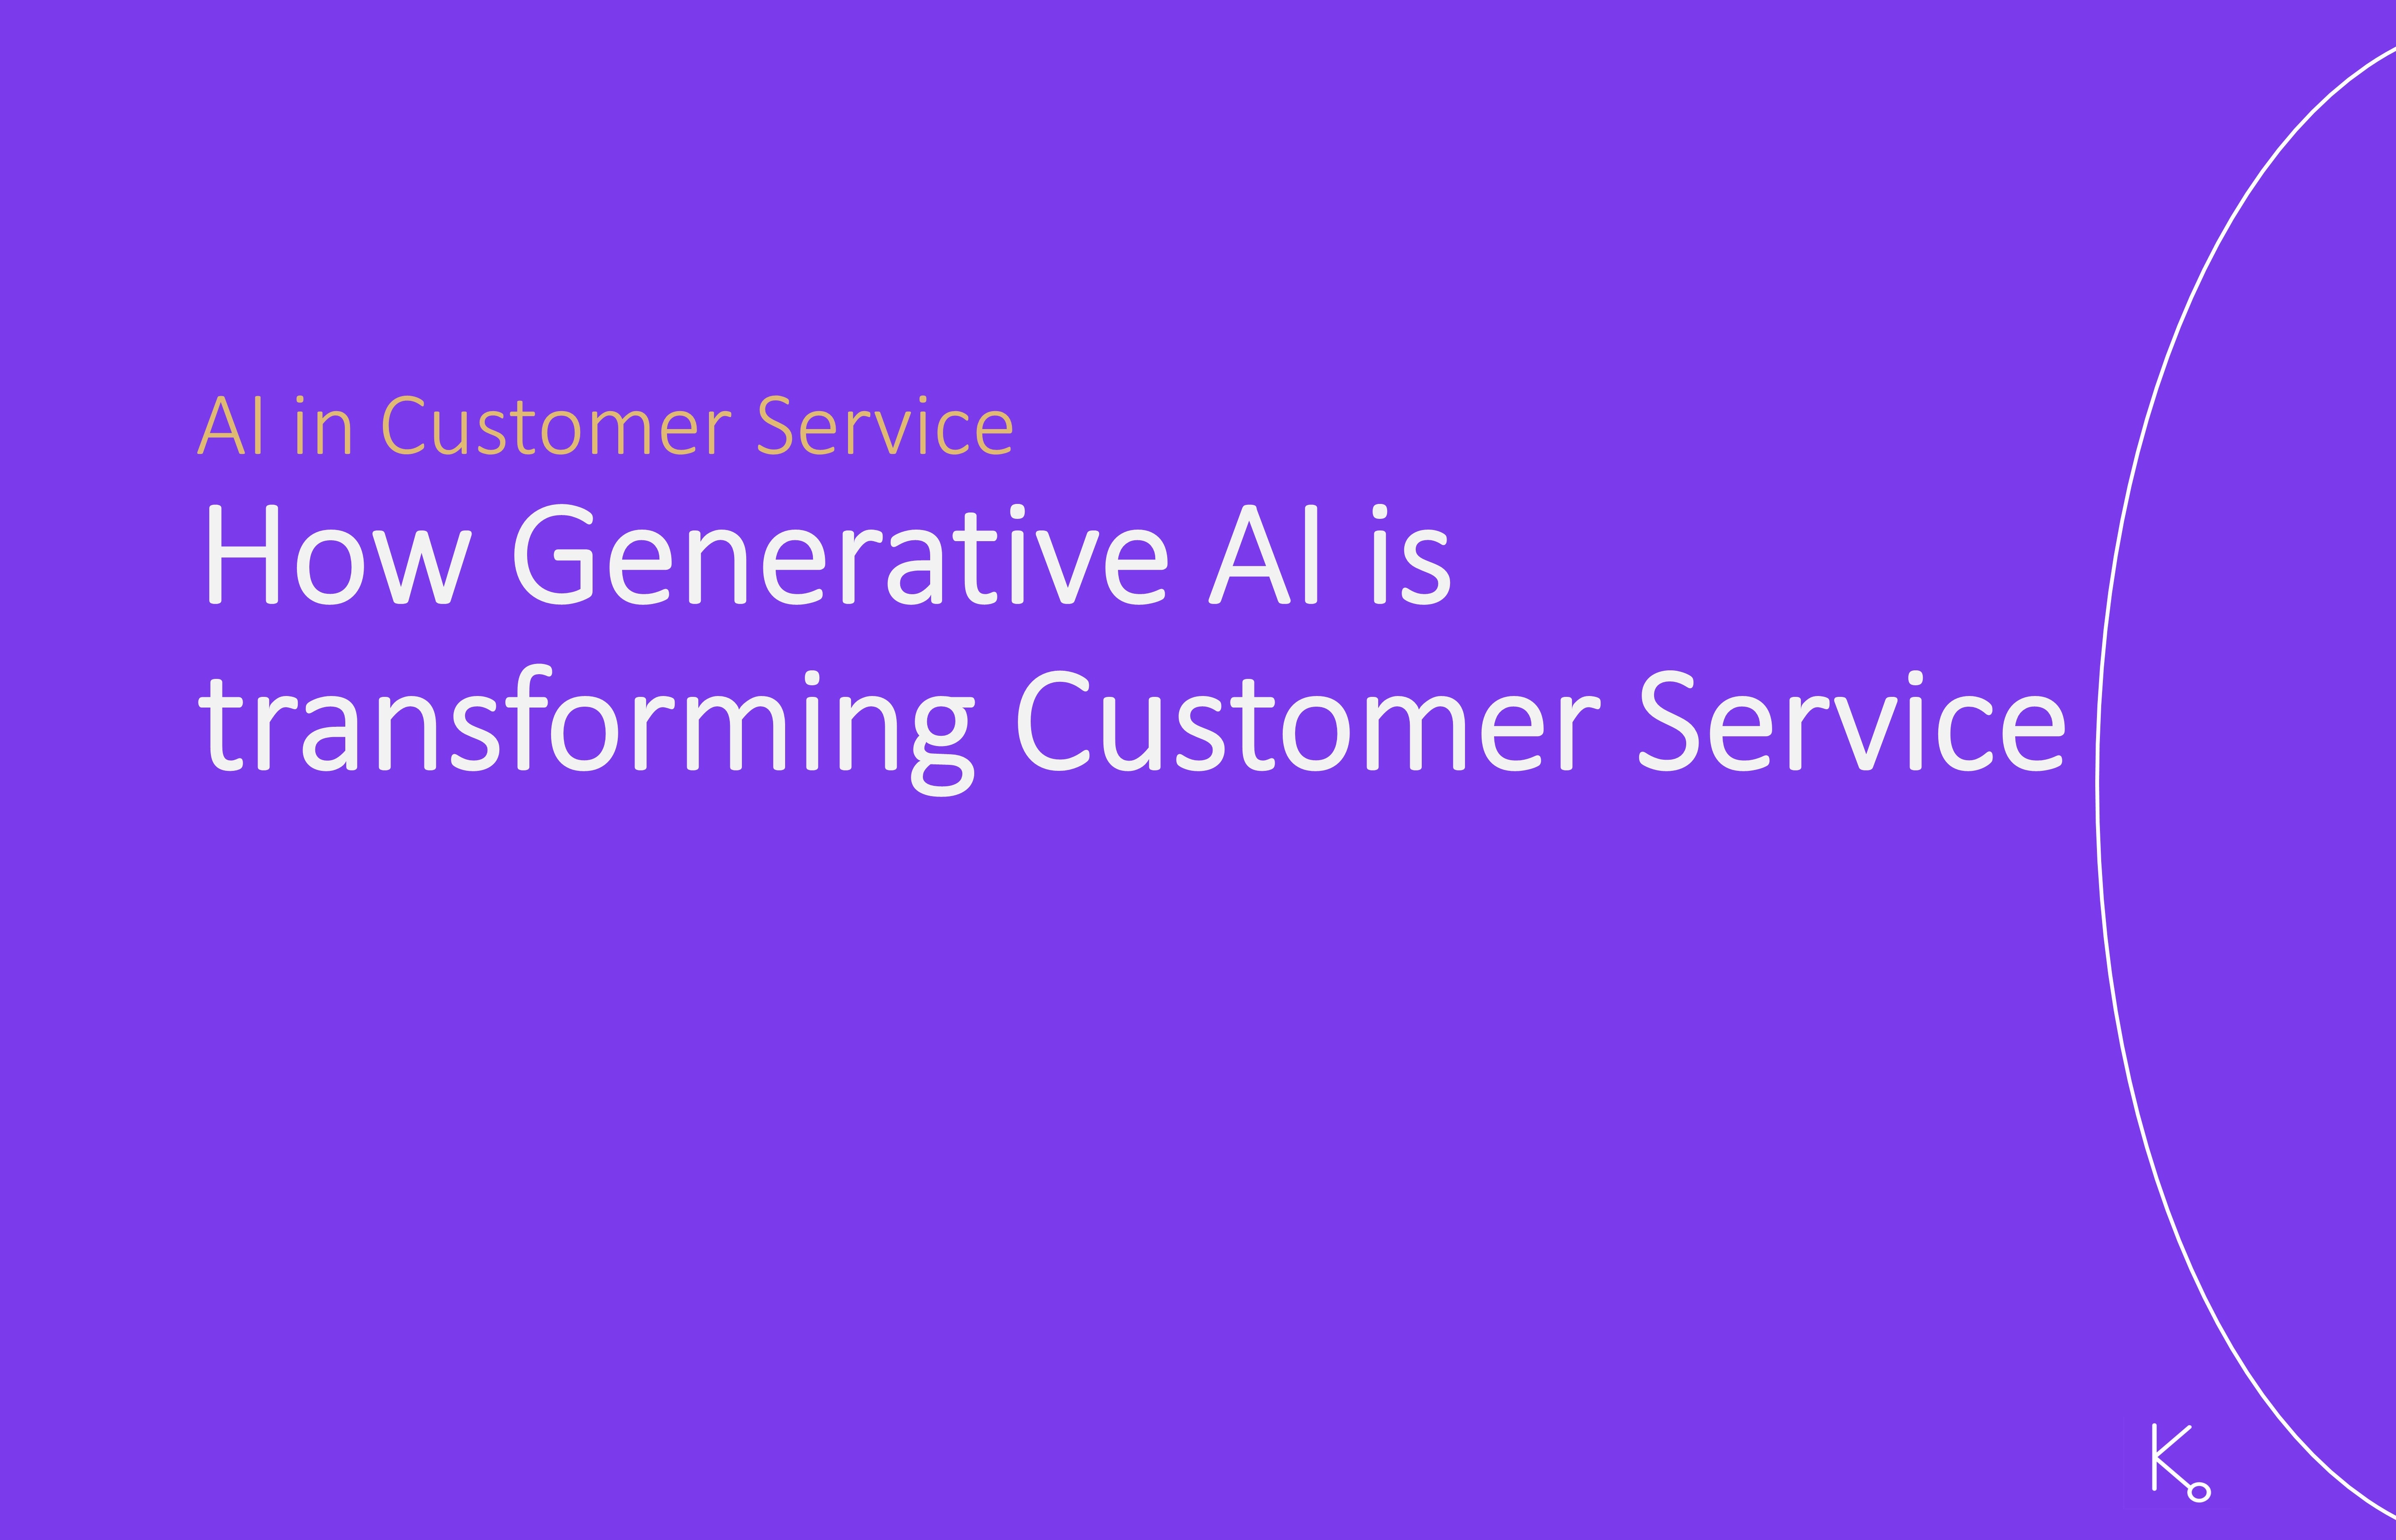 How Generative AI will enhance customer service